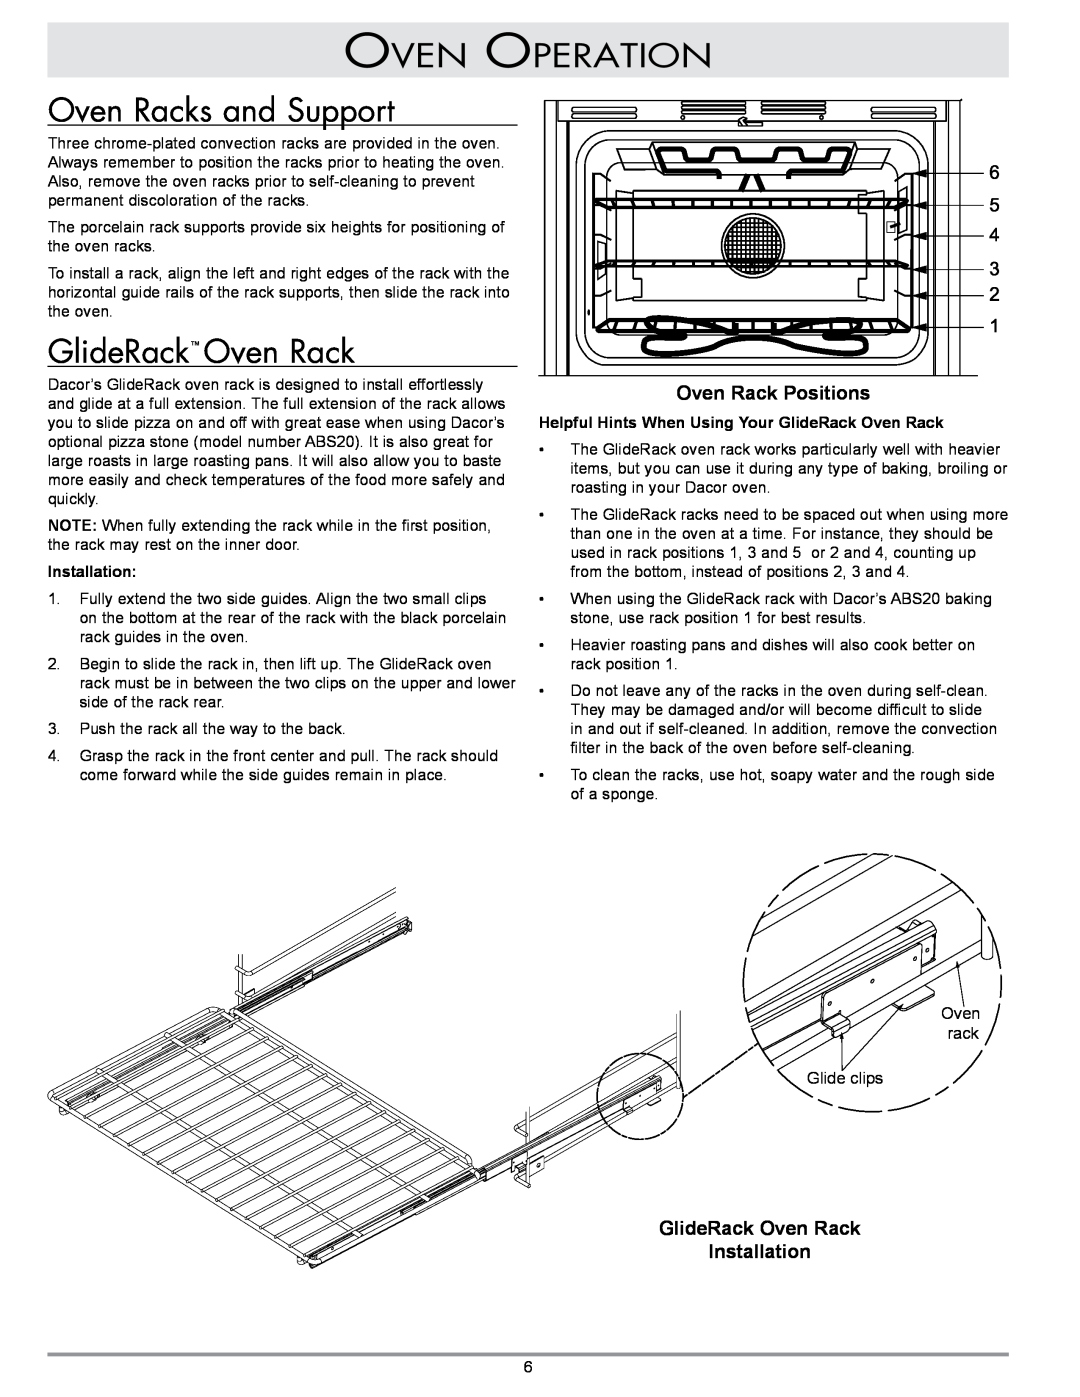 GE ECD, ECS, PCS, MCD, MCS, PCD manual Oven Rack Positions, GlideRack Oven Rack Installation, Oven rack Glide clips 